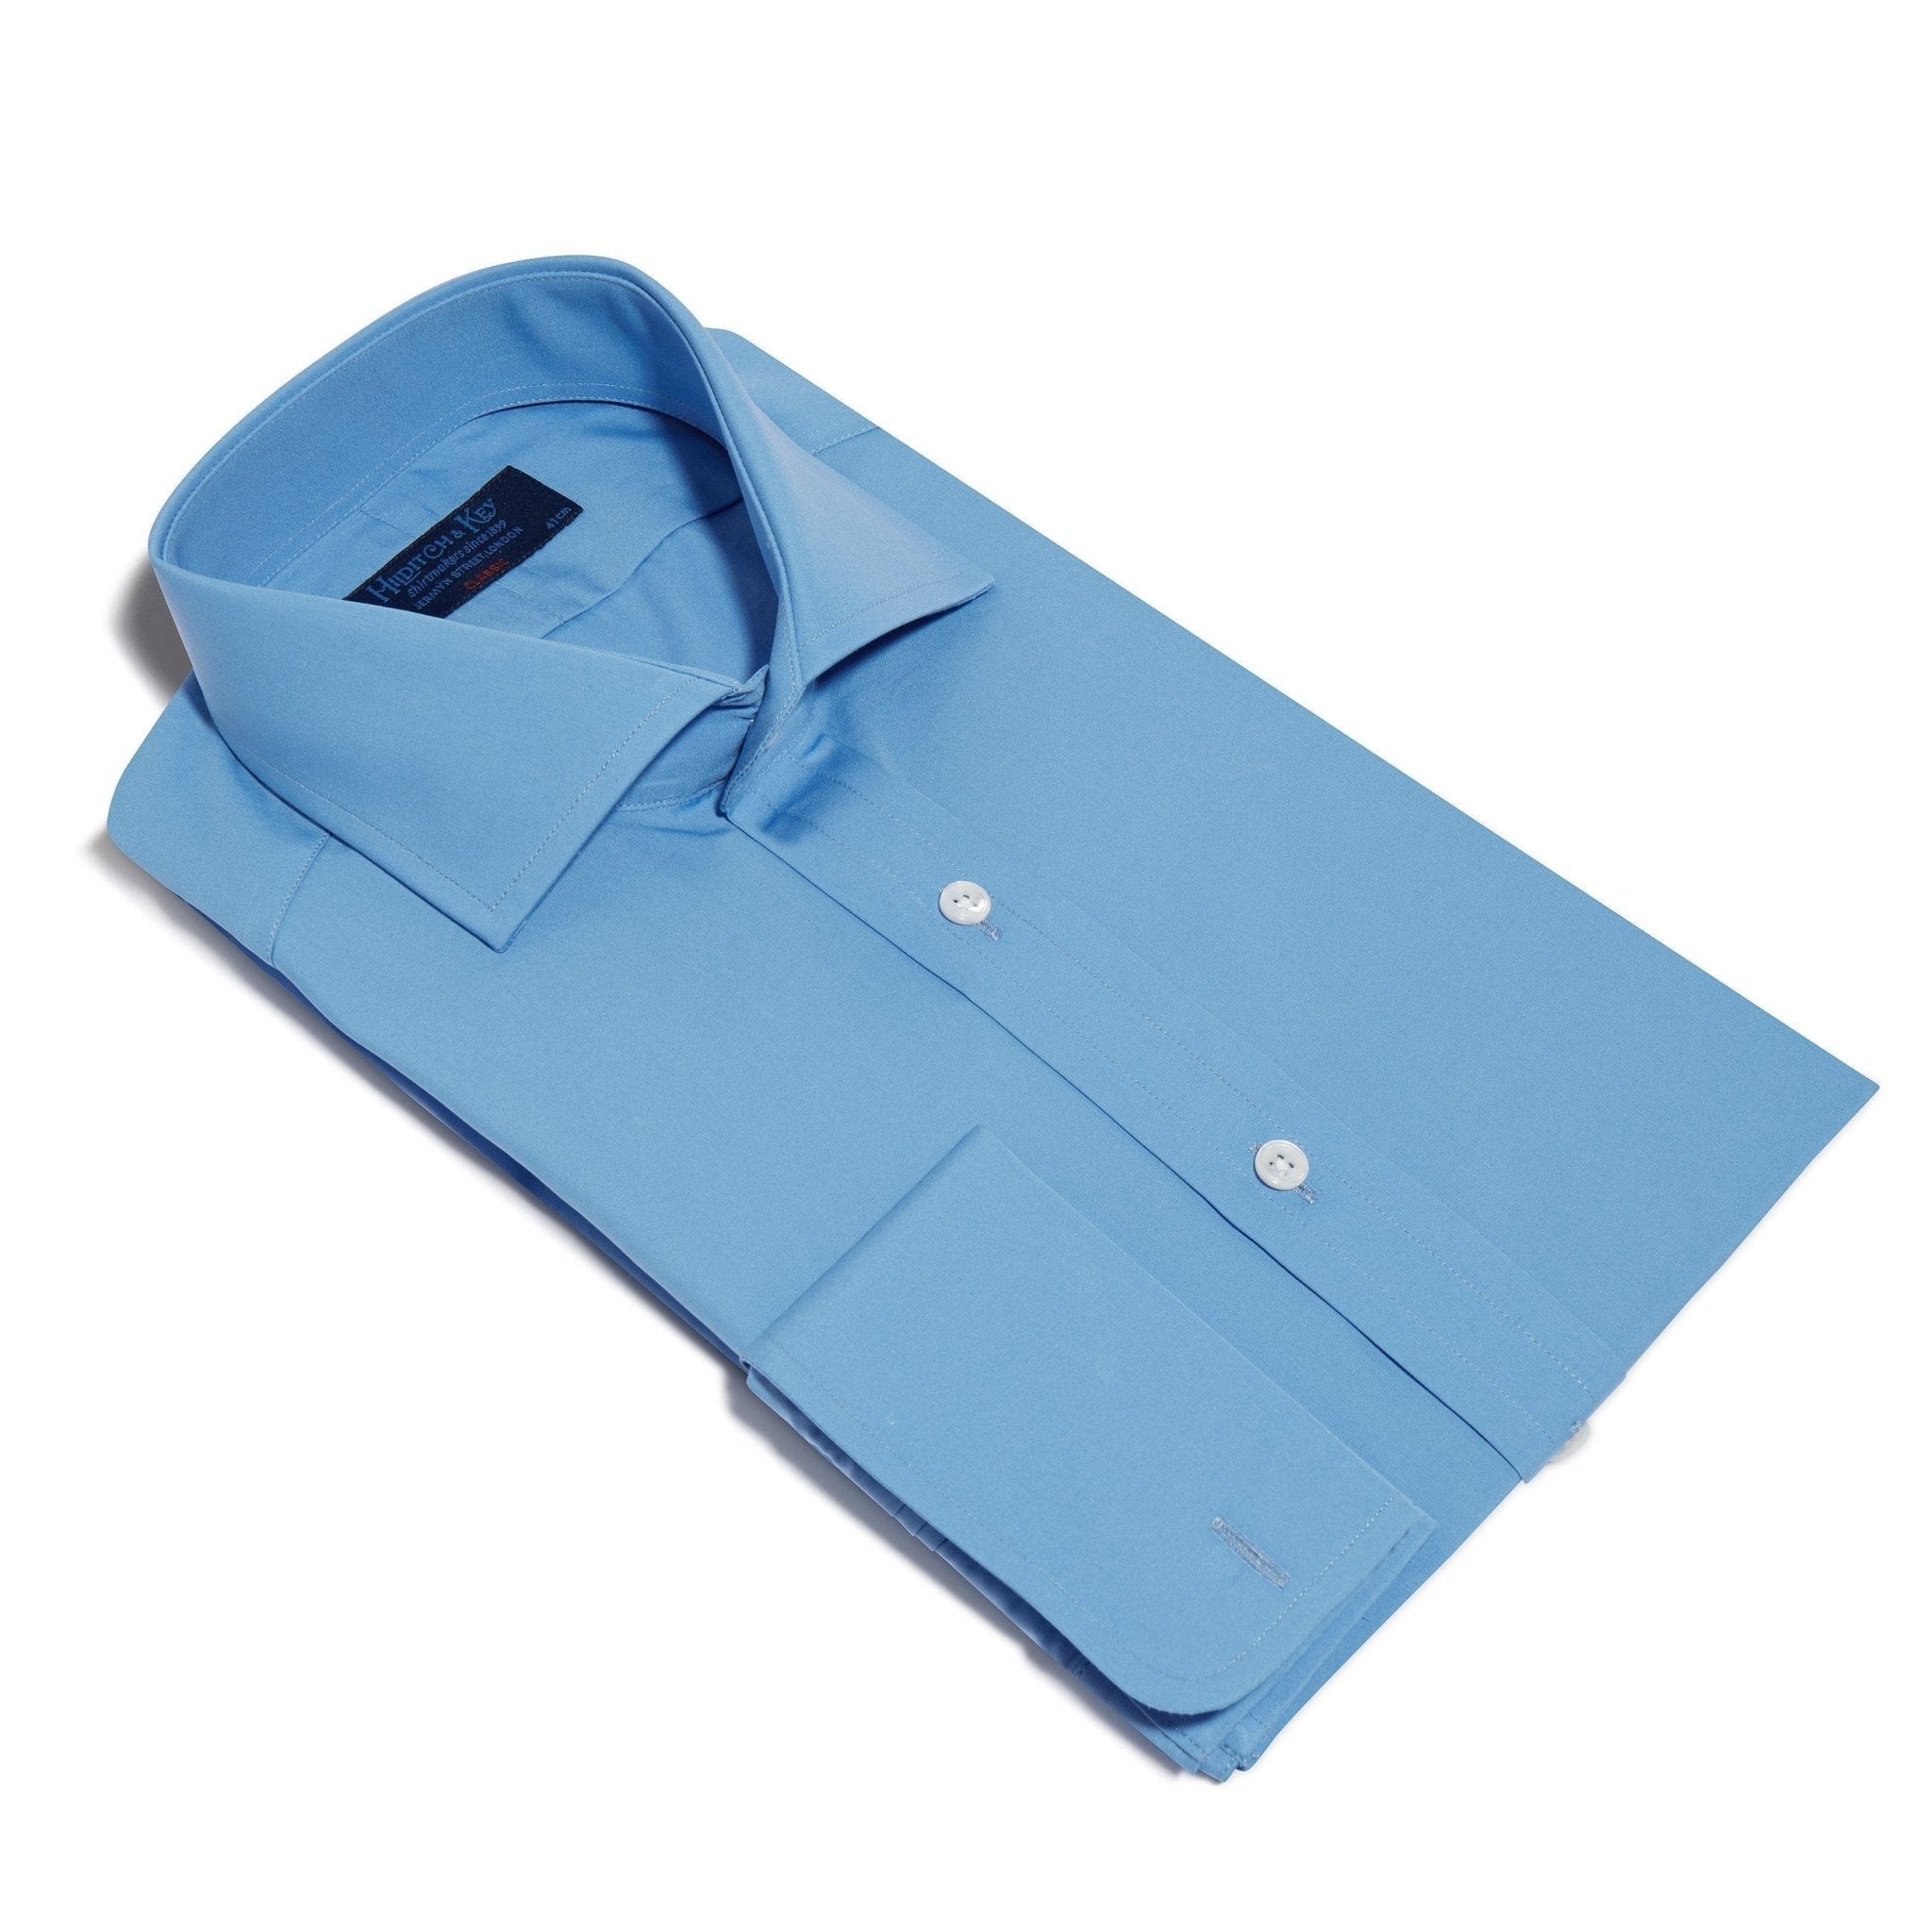 Classic Fit, Cut-away Collar, Double Cuff Shirt in a Plain Blue Poplin Cotton - Hilditch & Key